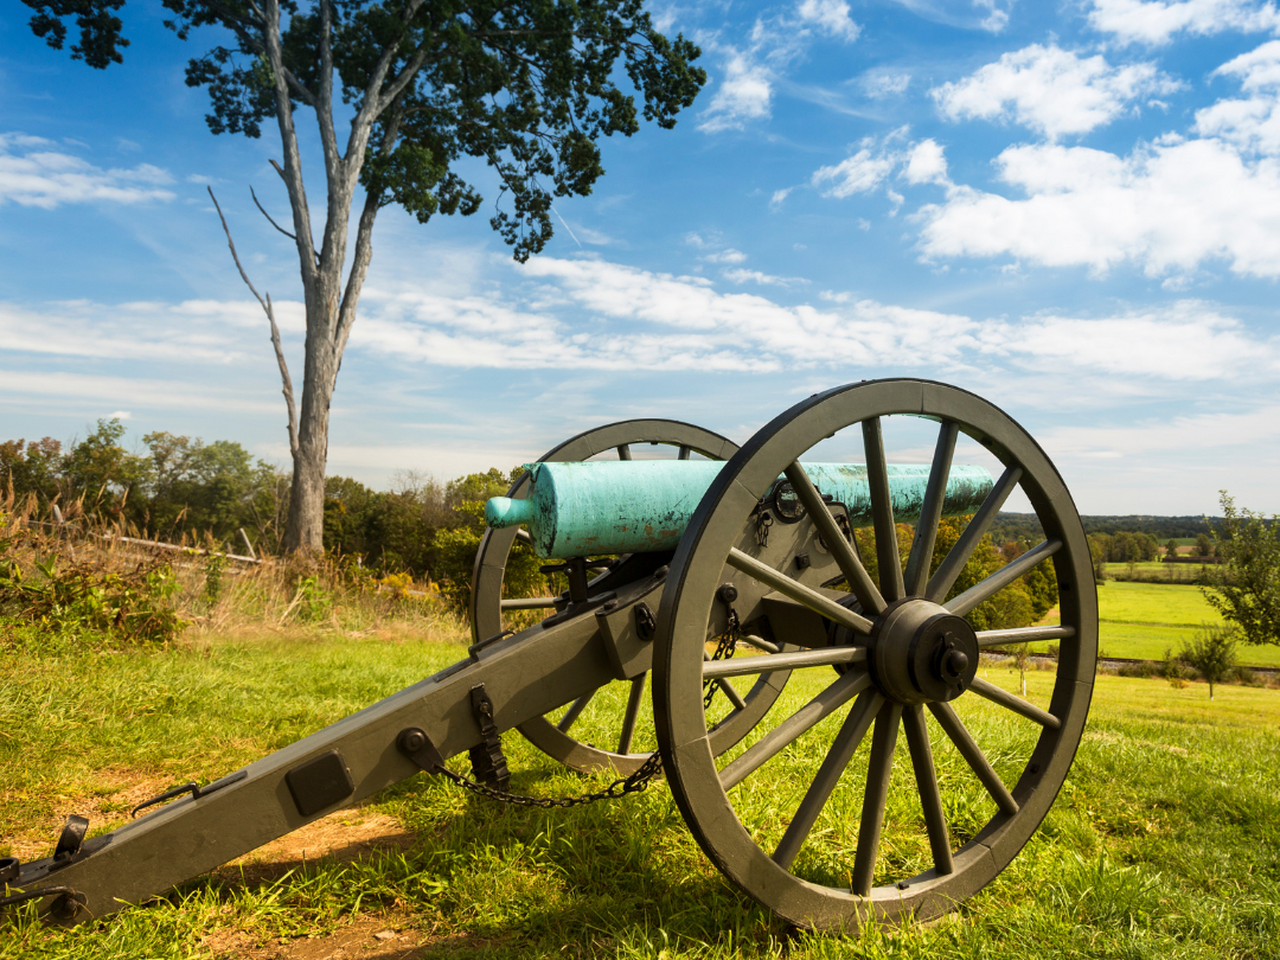 Historic Cannon at Gettysburg Battlefield